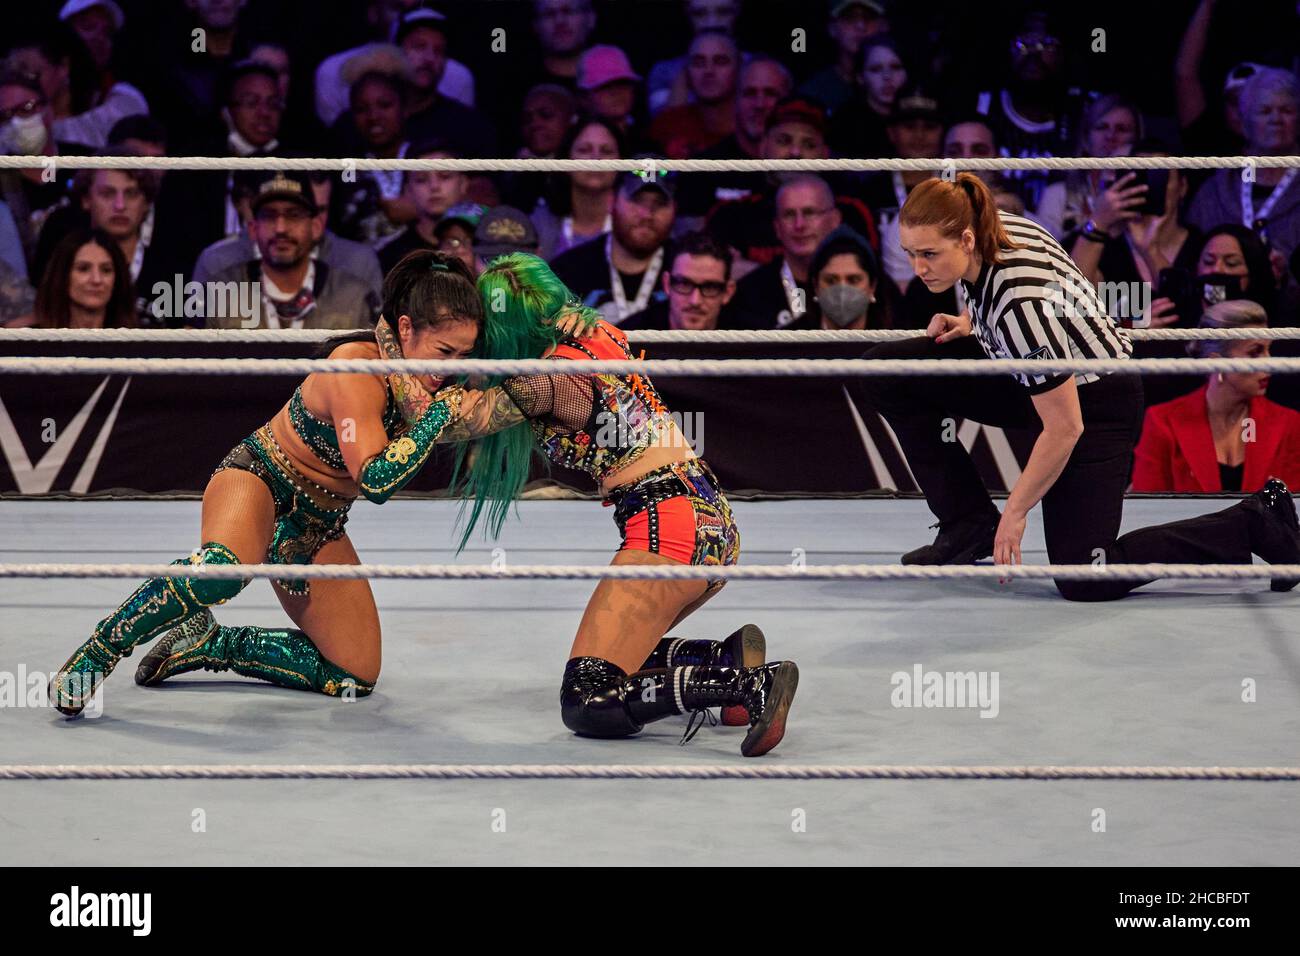 Tampa, Florida, USA. 26th Dec. 2021. Xia Li vs Shotzi Blackheart during WWE fight at Amalie Arena. Credit: Yaroslav Sabitov/YES Market Media/Alamy Live News Stock Photo